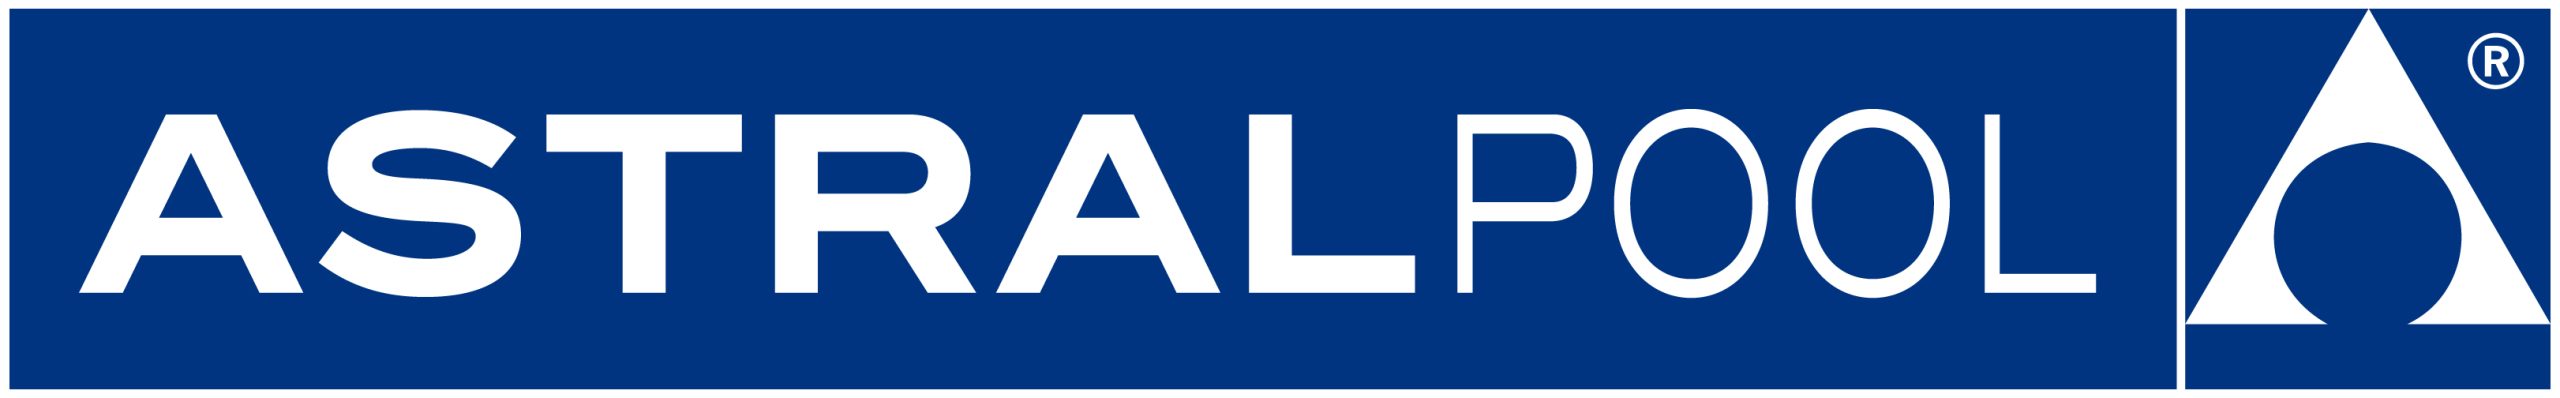 astralpool-logo (1)